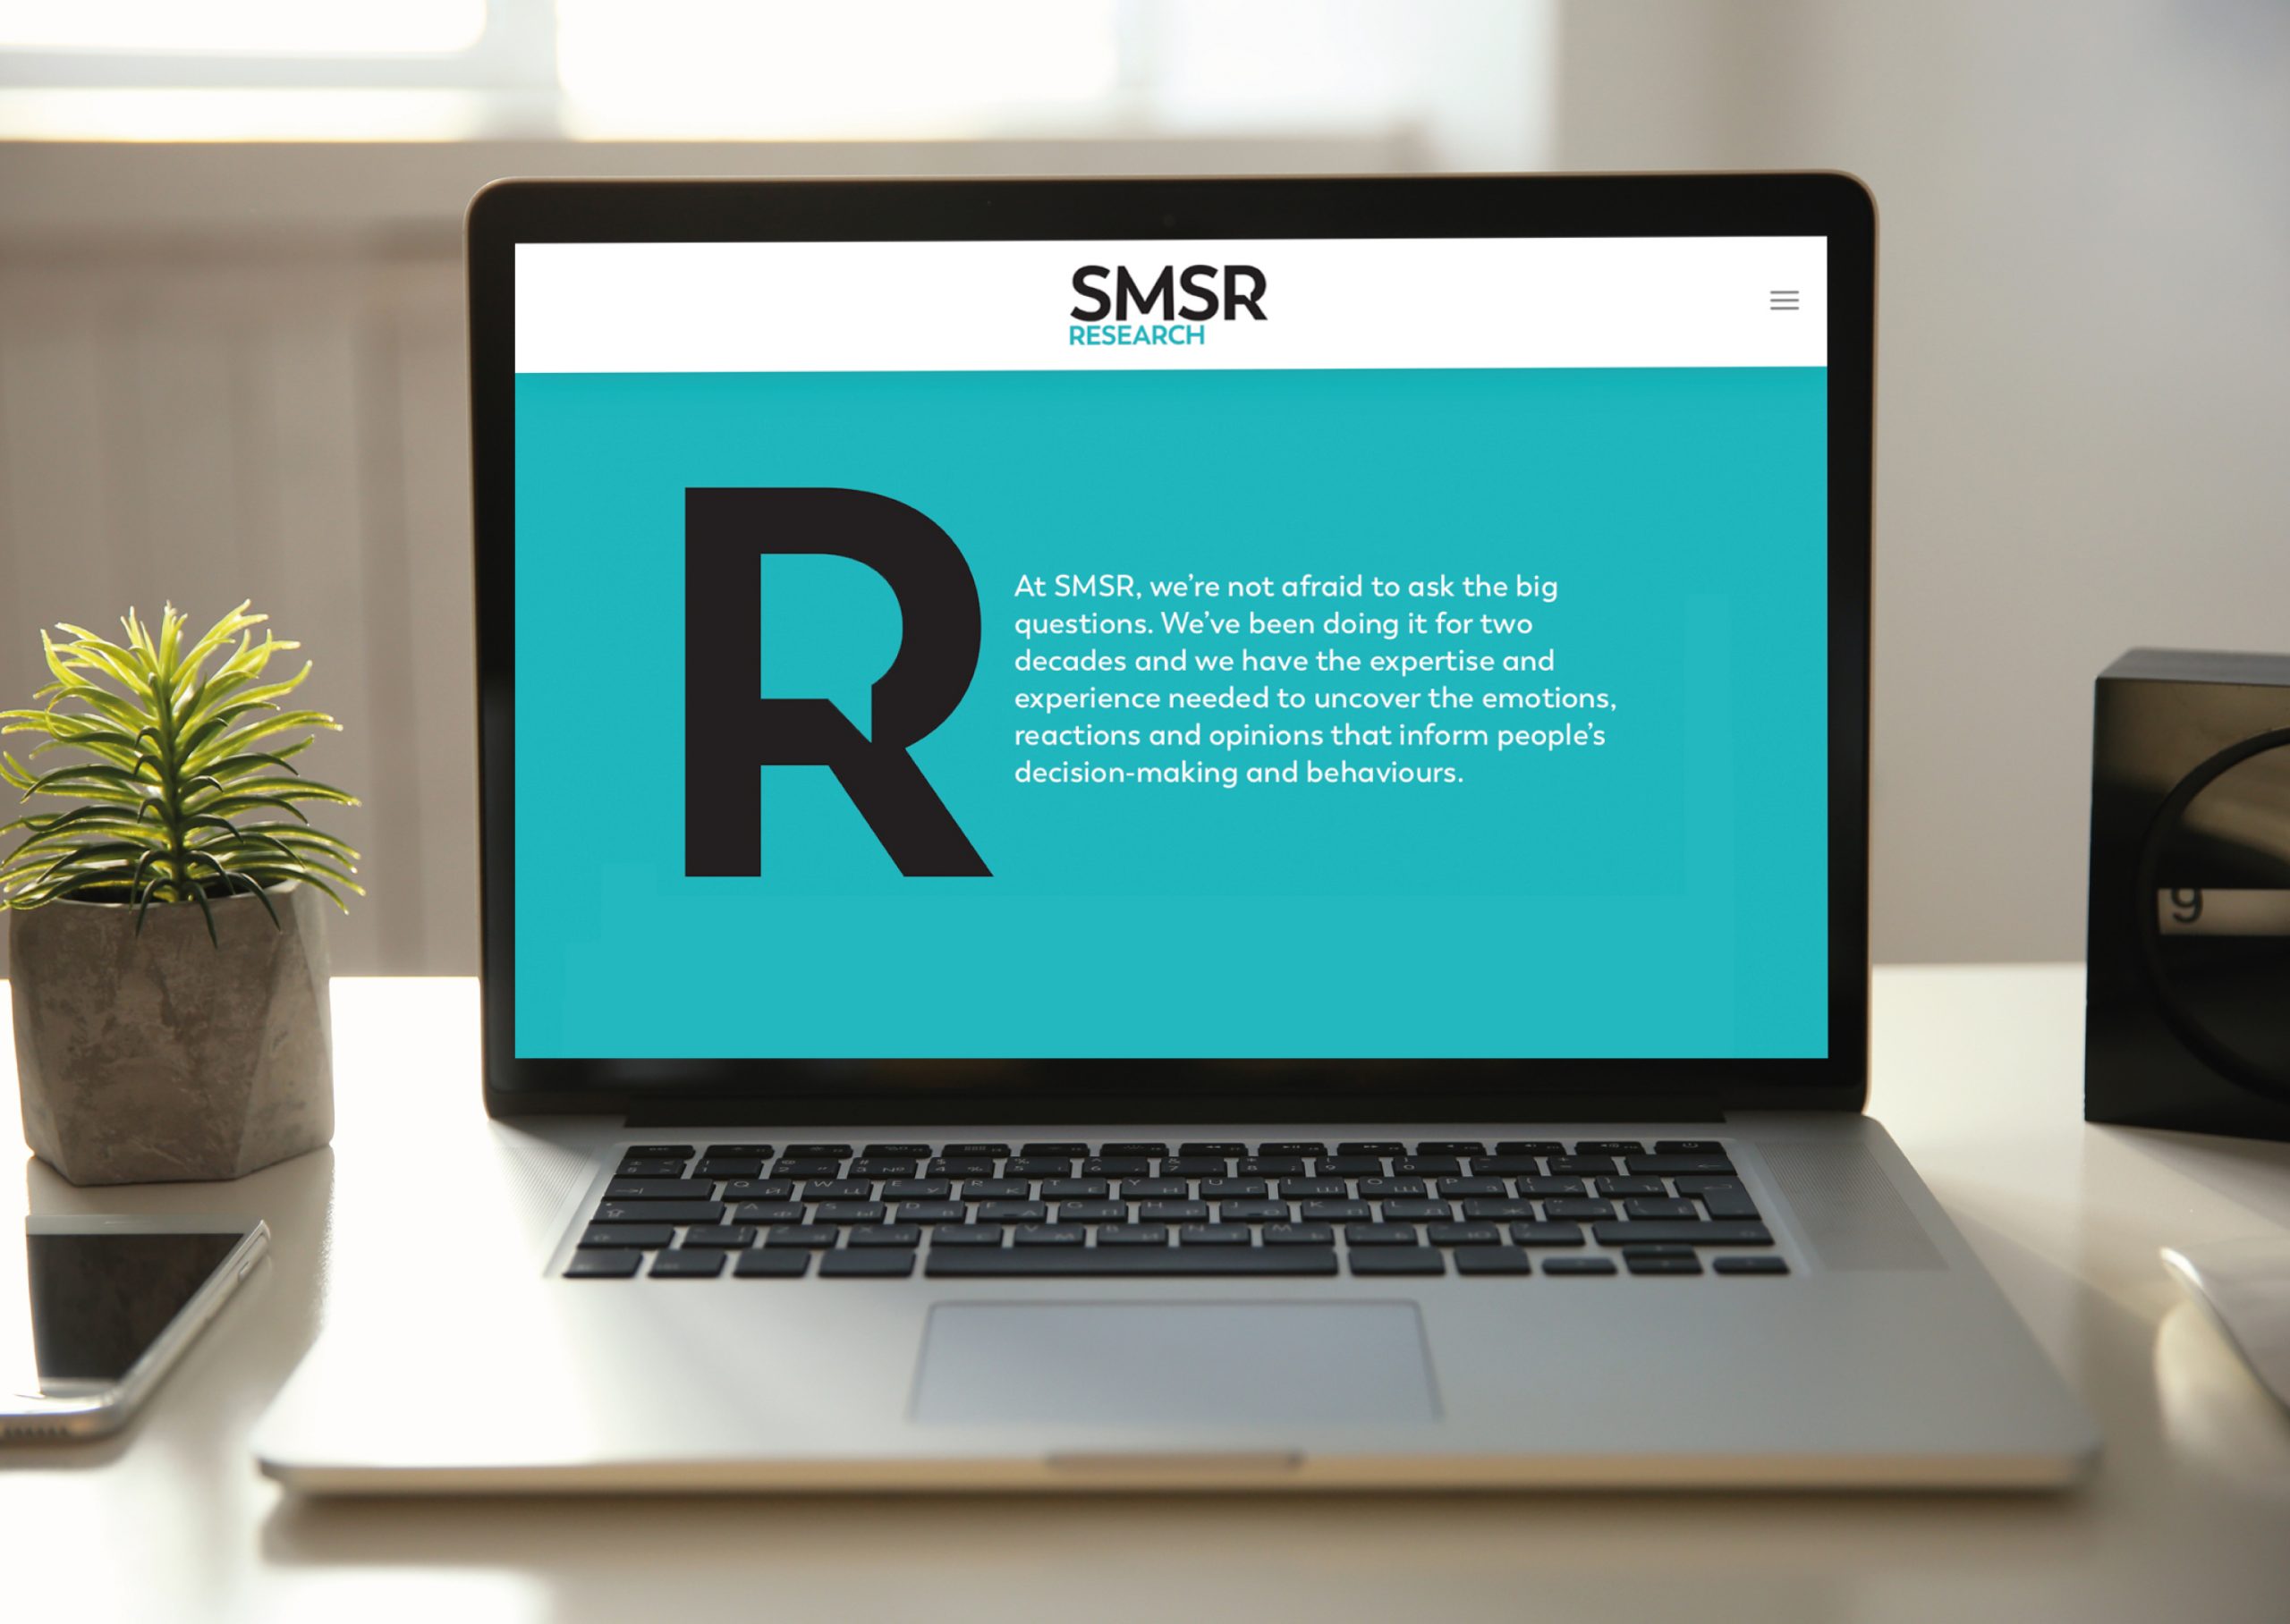 SMSR Research